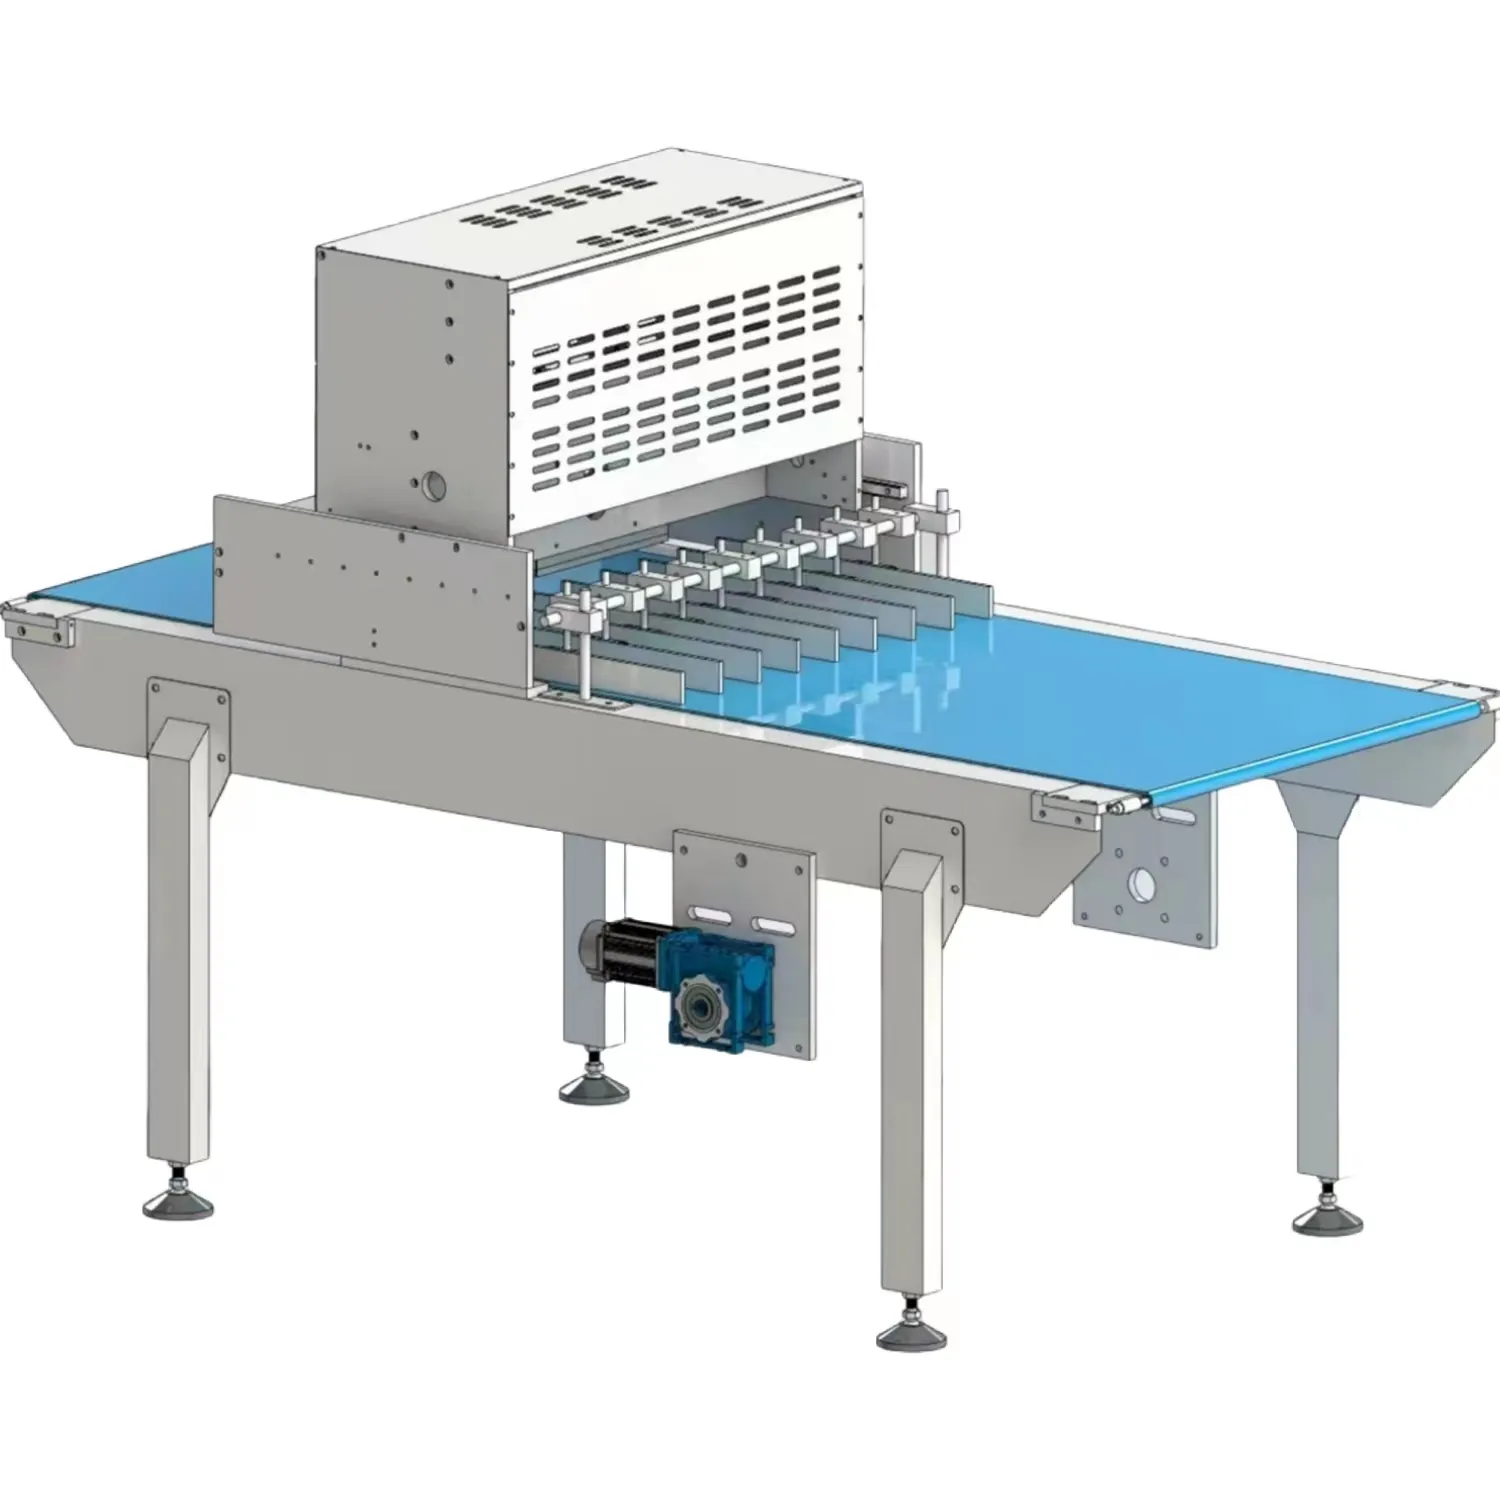 Wanlisonic vollautomatische Ultraschall-Sushi-Rolle Kuchen-Schneidemaschine Toast-Schneidegerät